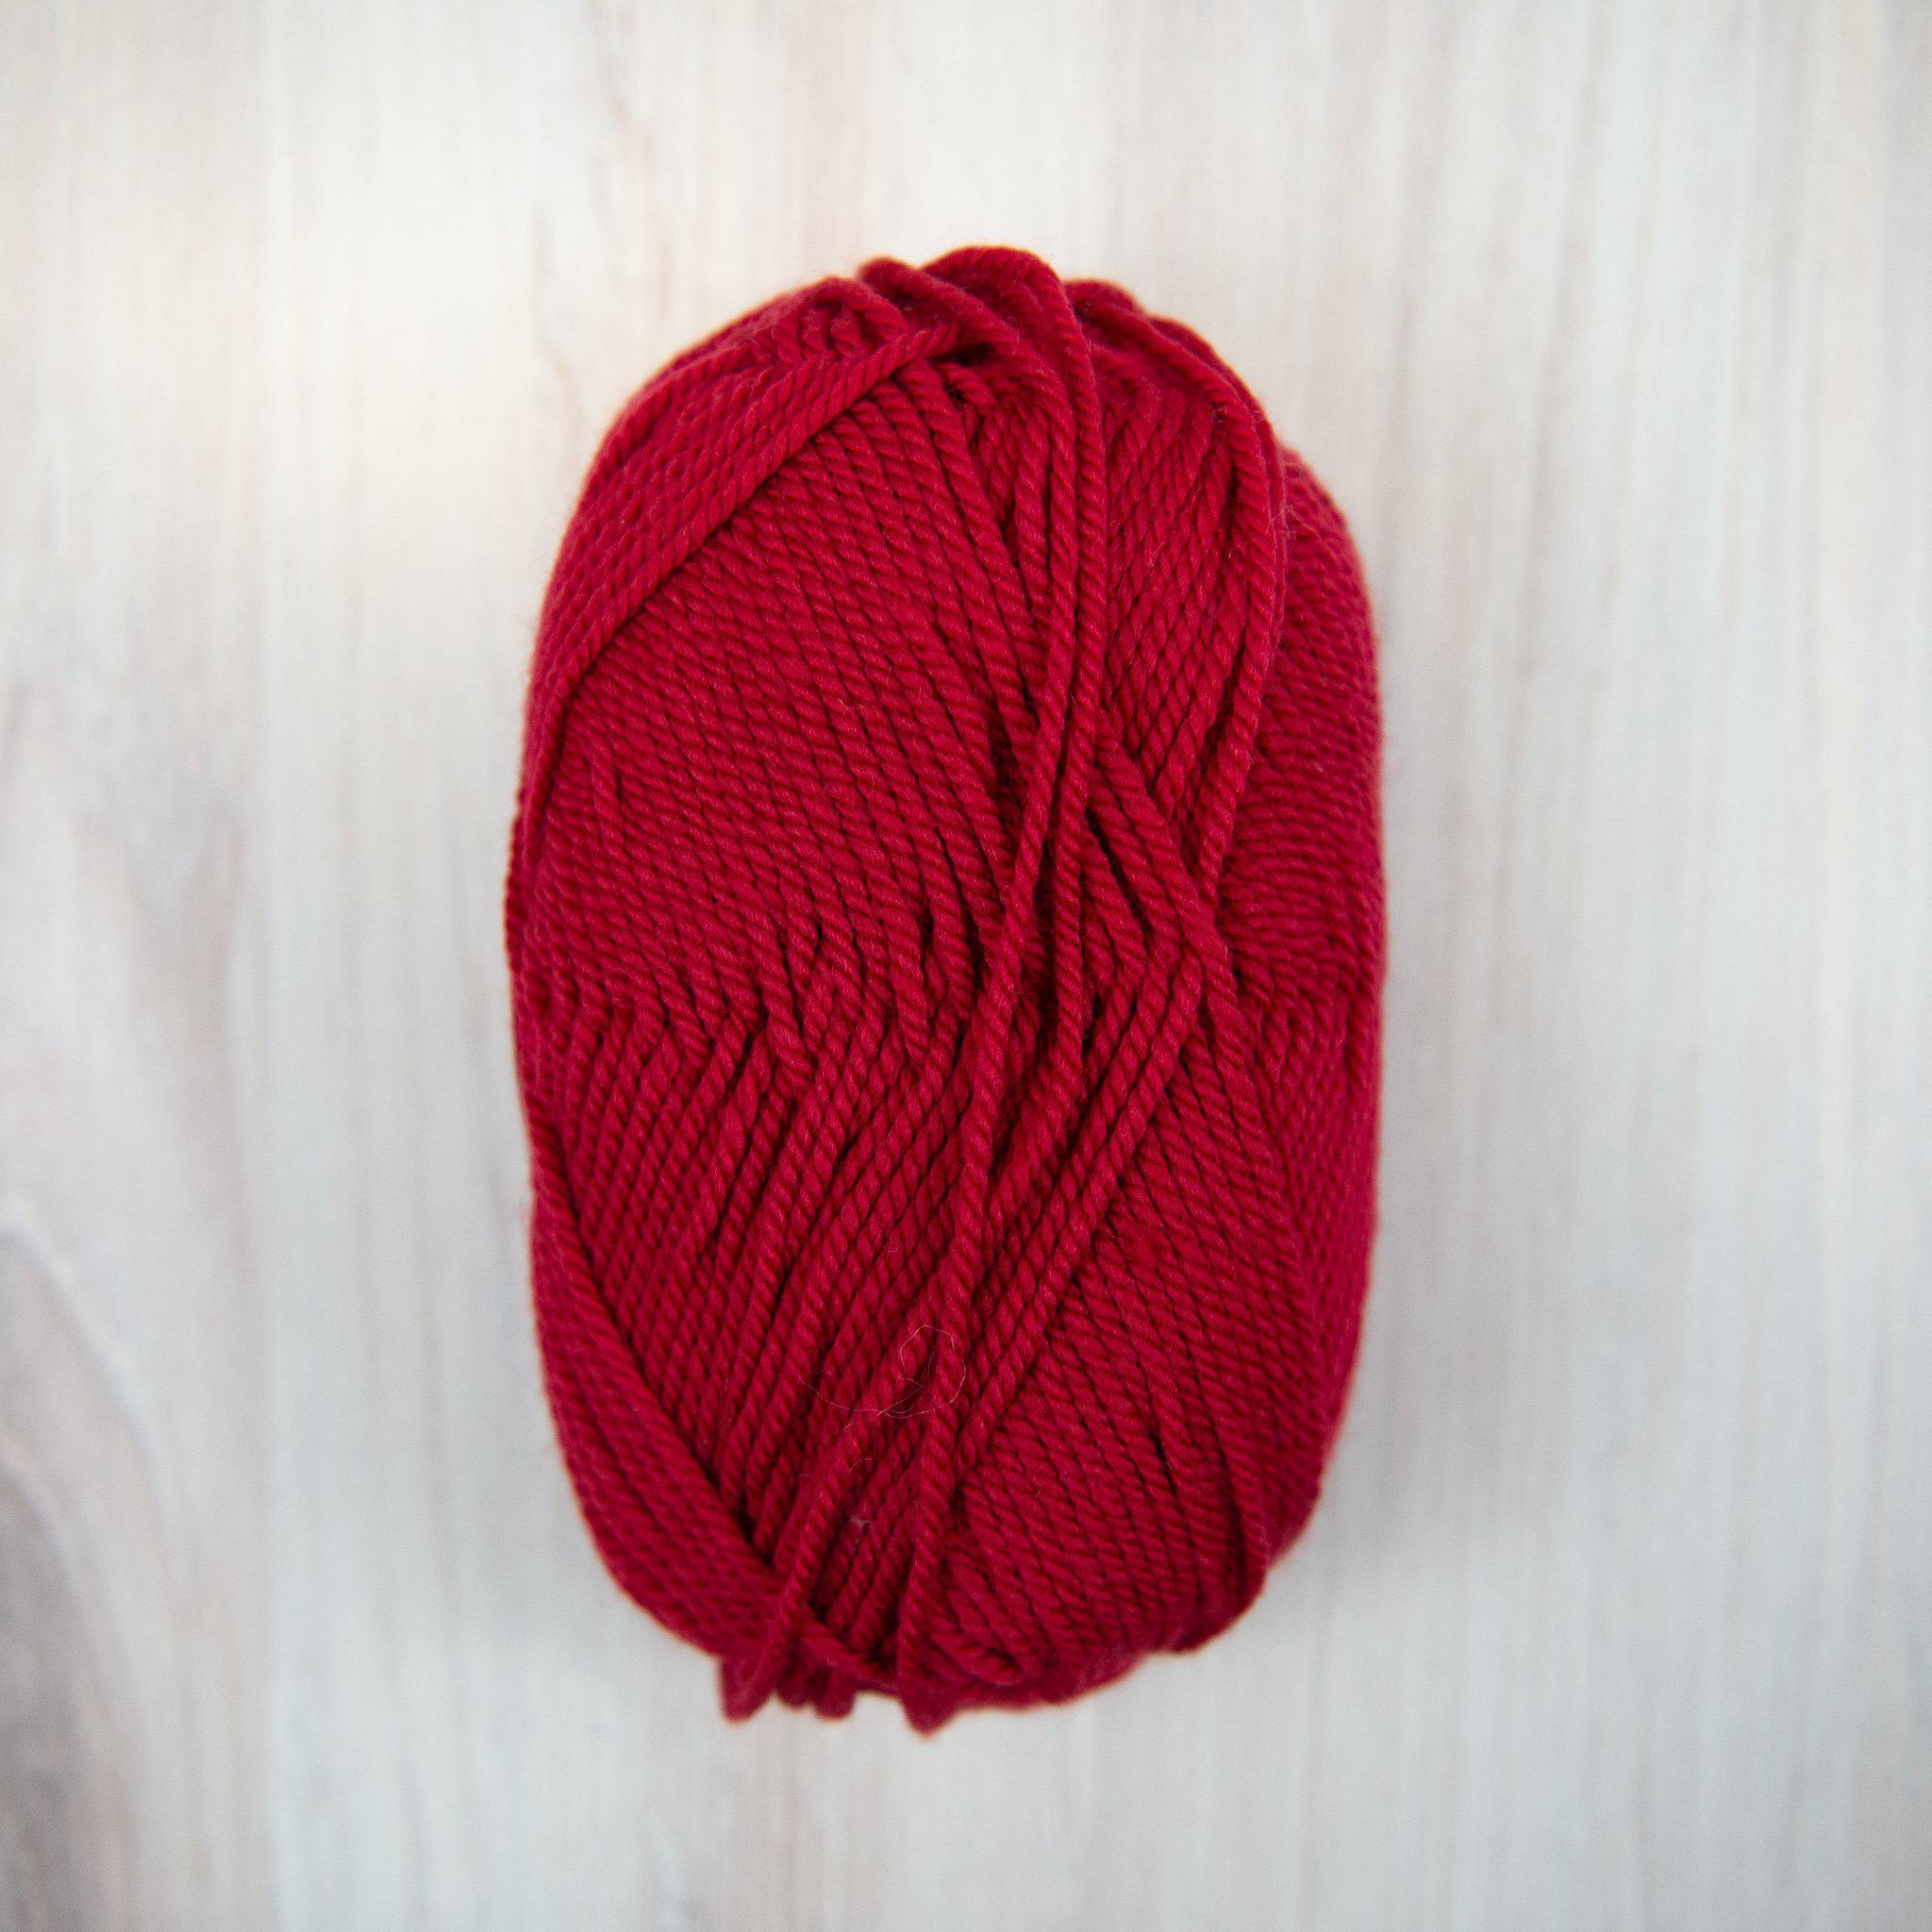 Be Wool by Universal Yarn - Wool/Acrylic Super Bulky Yarn - 20 Colors